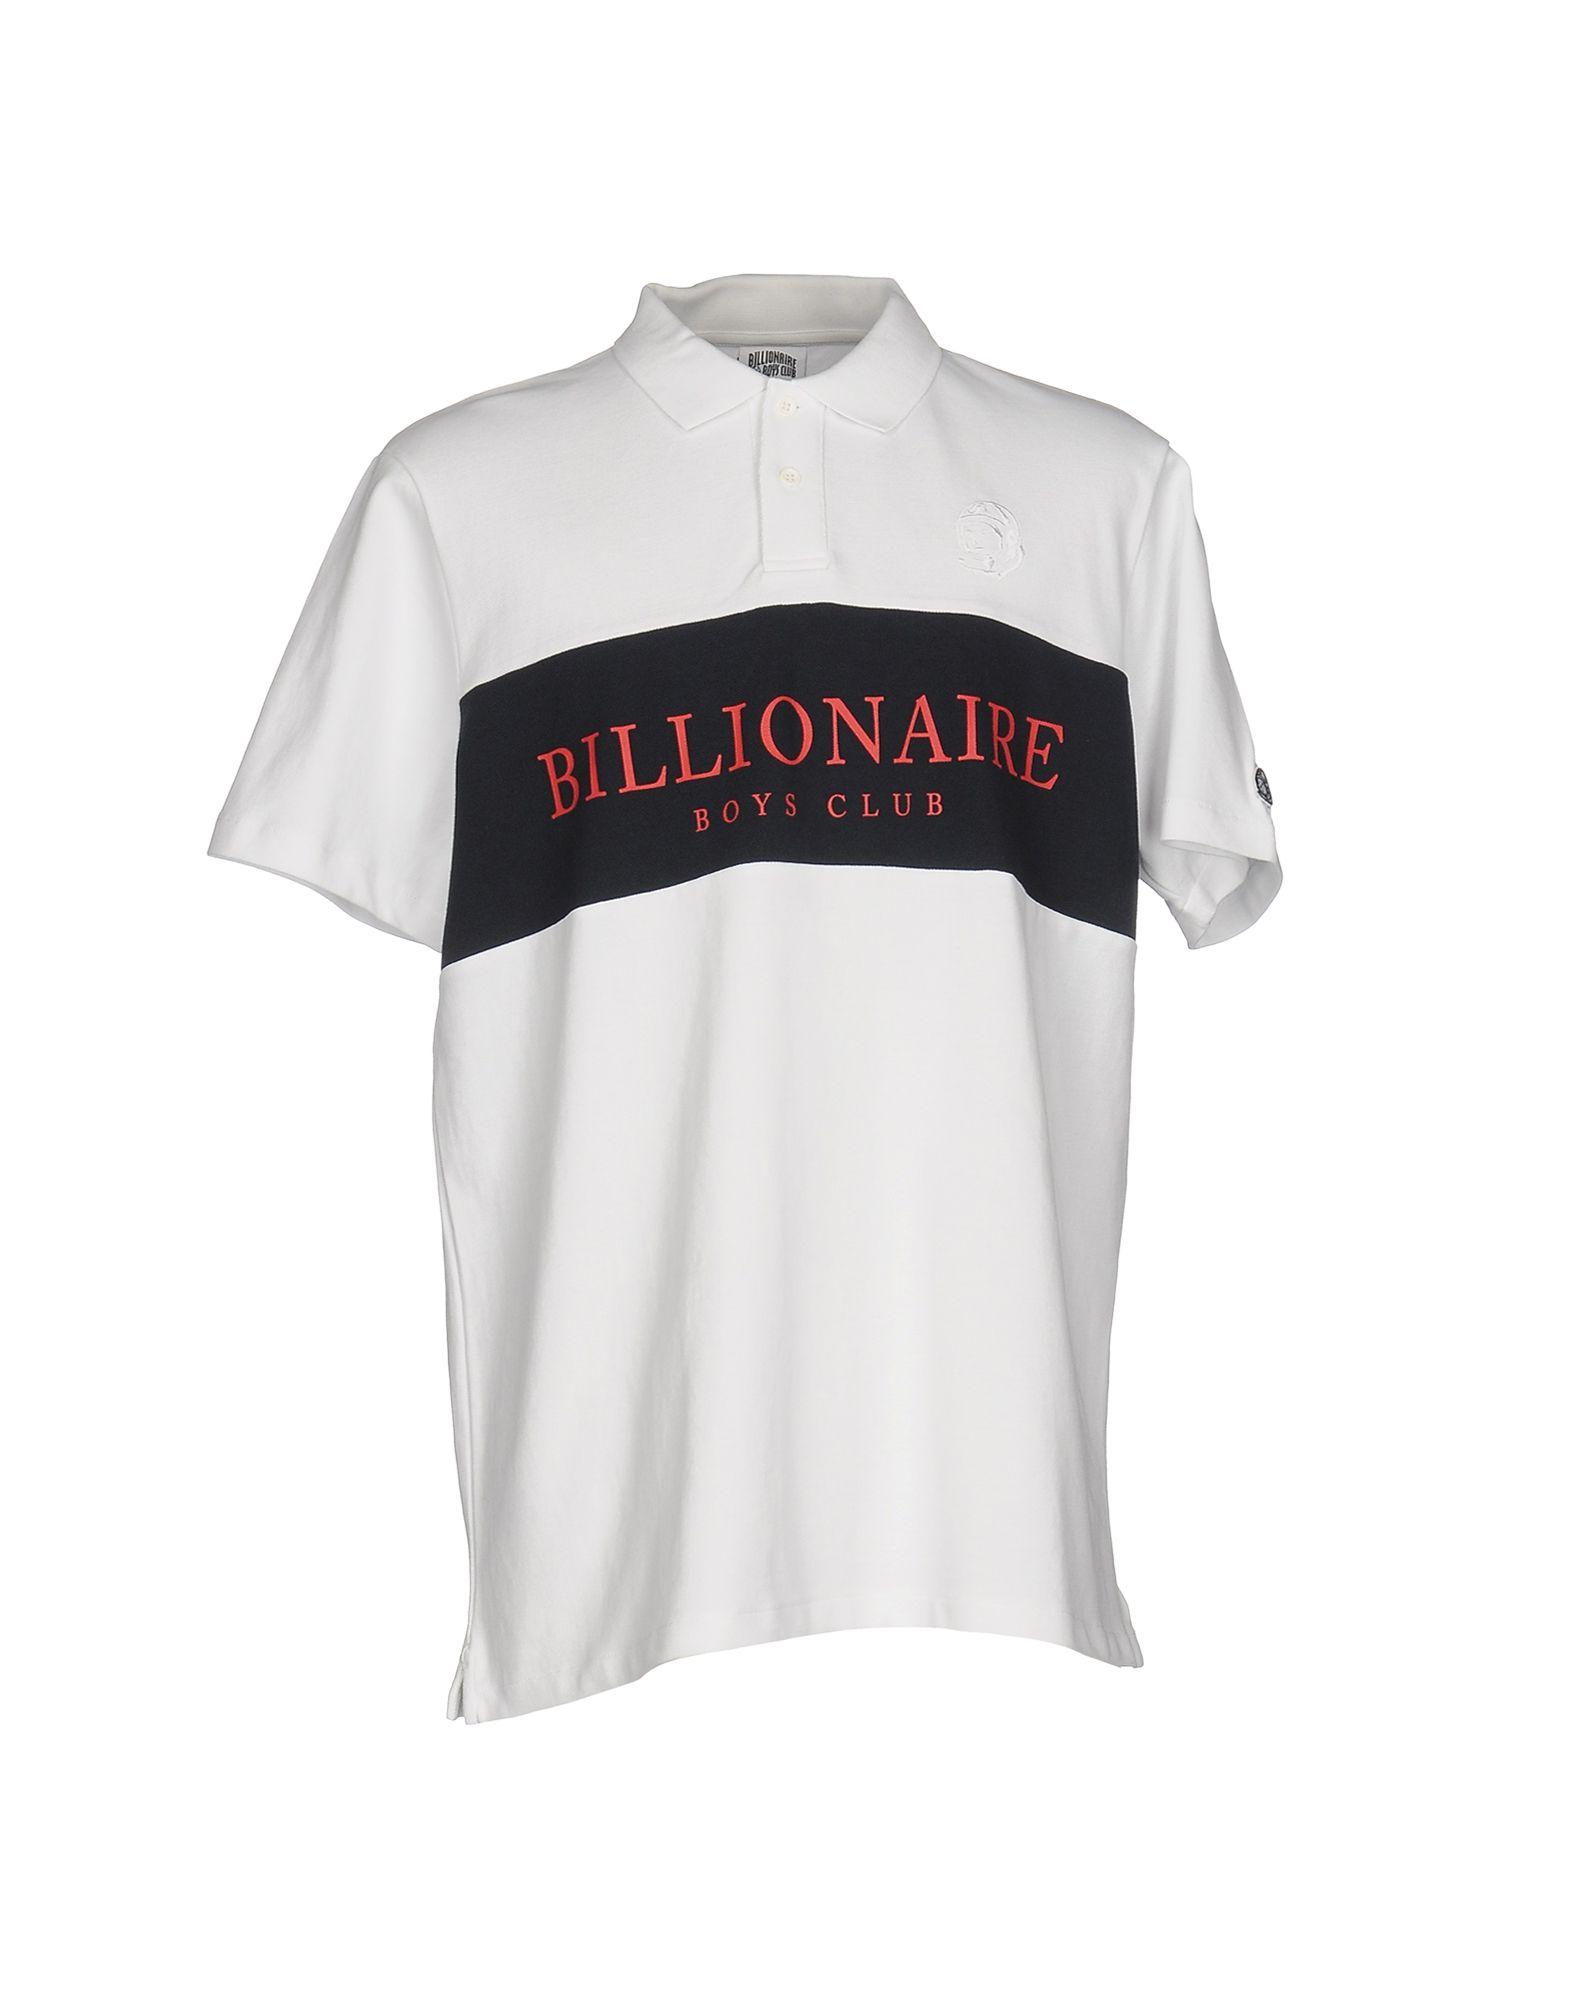 Lyst - Billionaire Boys Club - Ice Cream Polo Shirt in White for Men